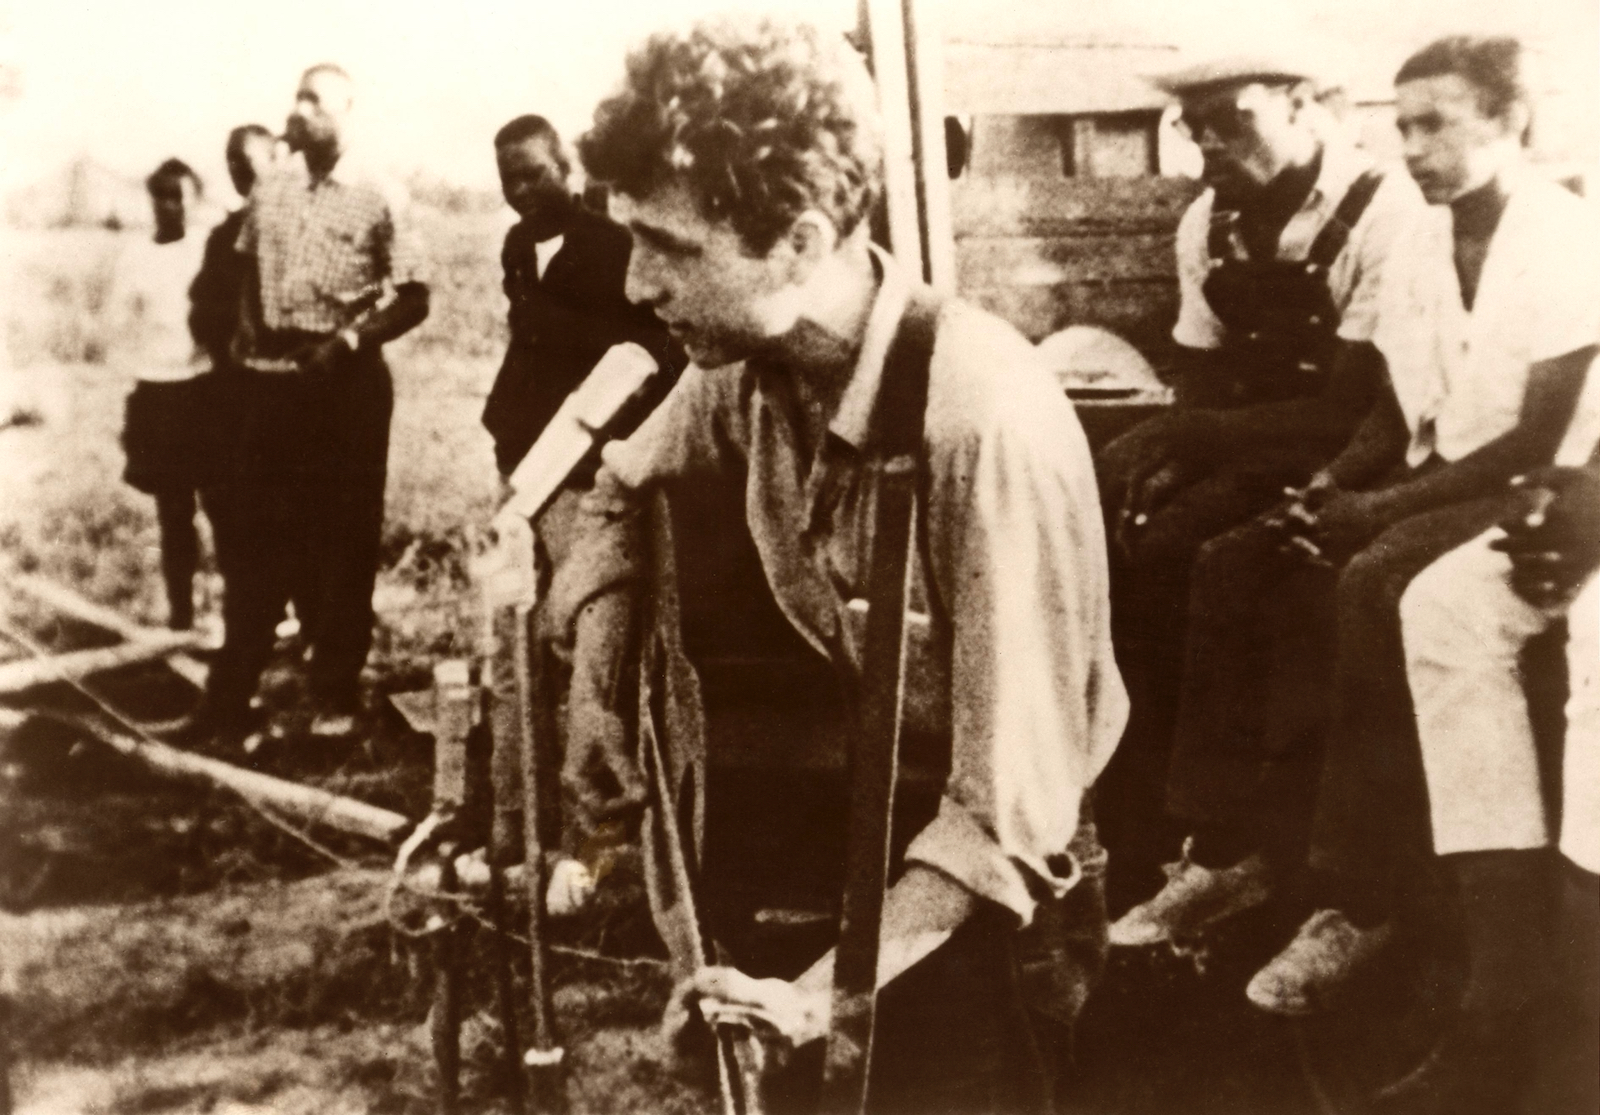 Bob Dylan, Historian